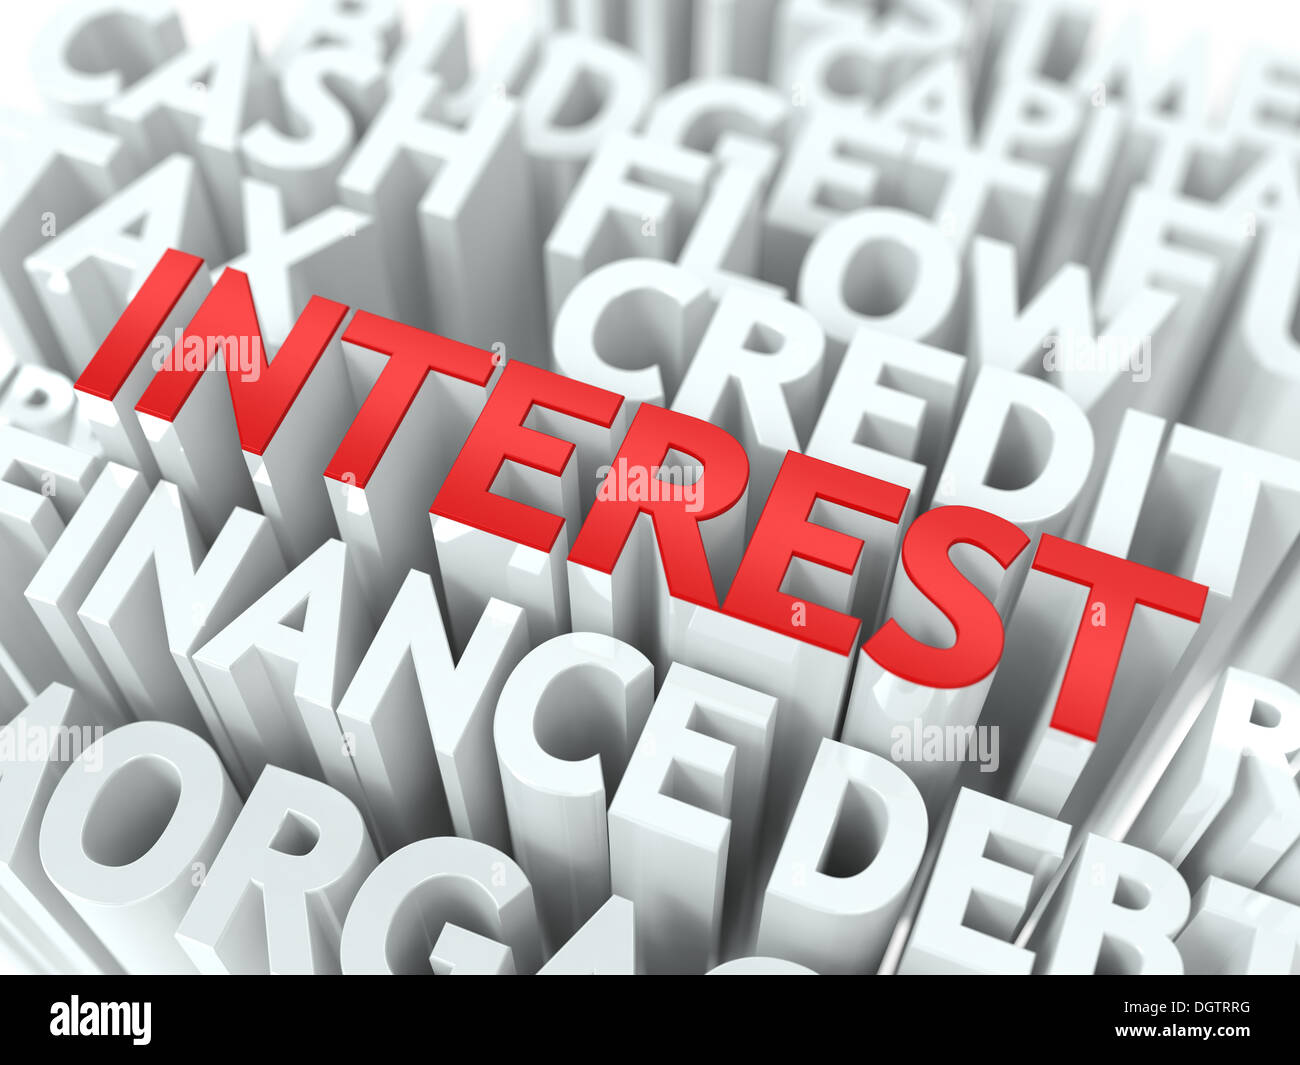 Interest. The Wordcloud Concept. Stock Photo